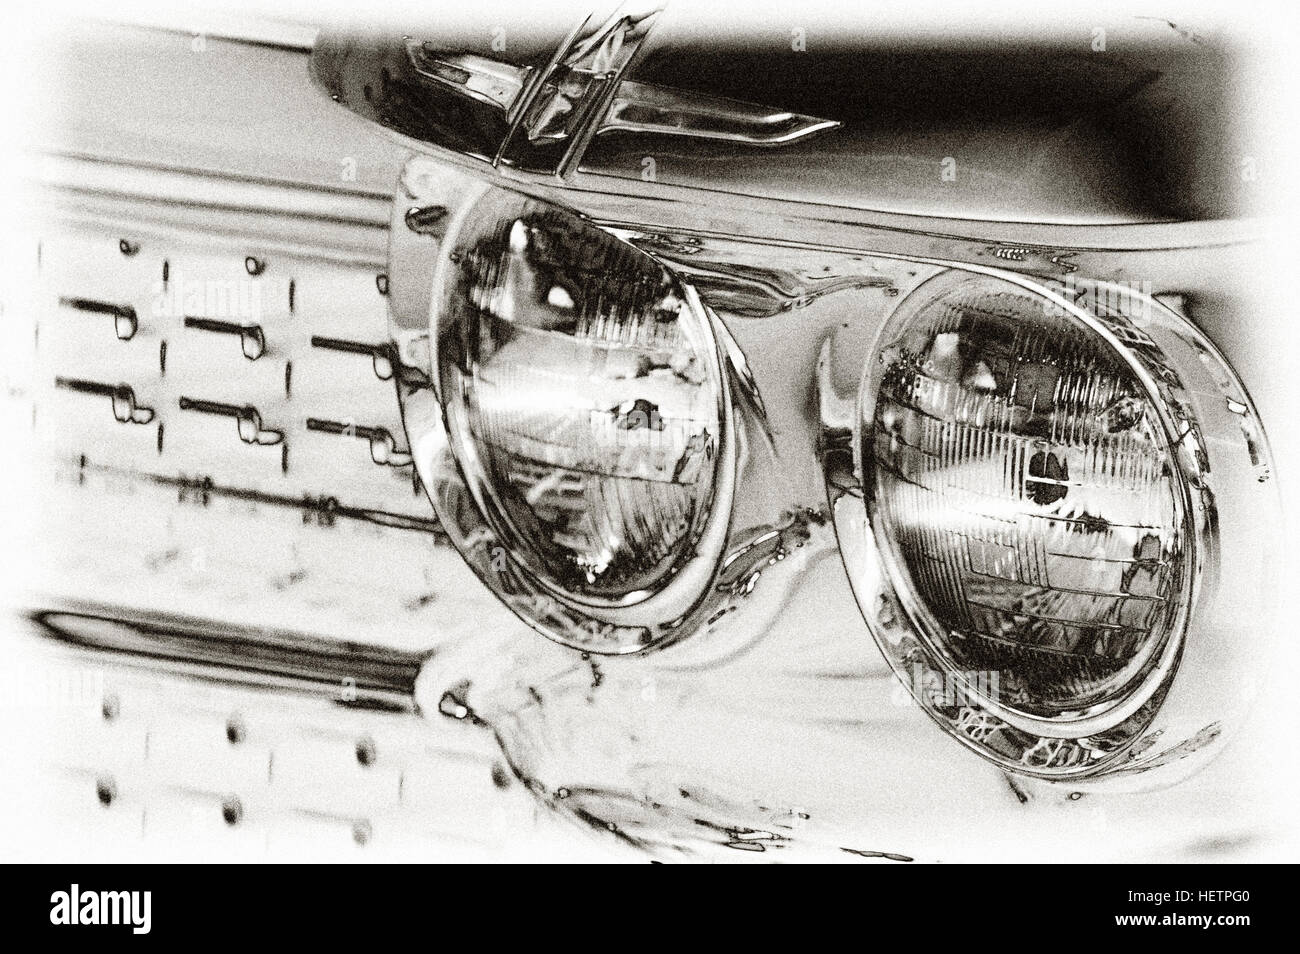 Photo Cadillac Coupe De Ville, Year 1959, 2-door  coupe, radiator grille, photo auto headlight, Stock Photo